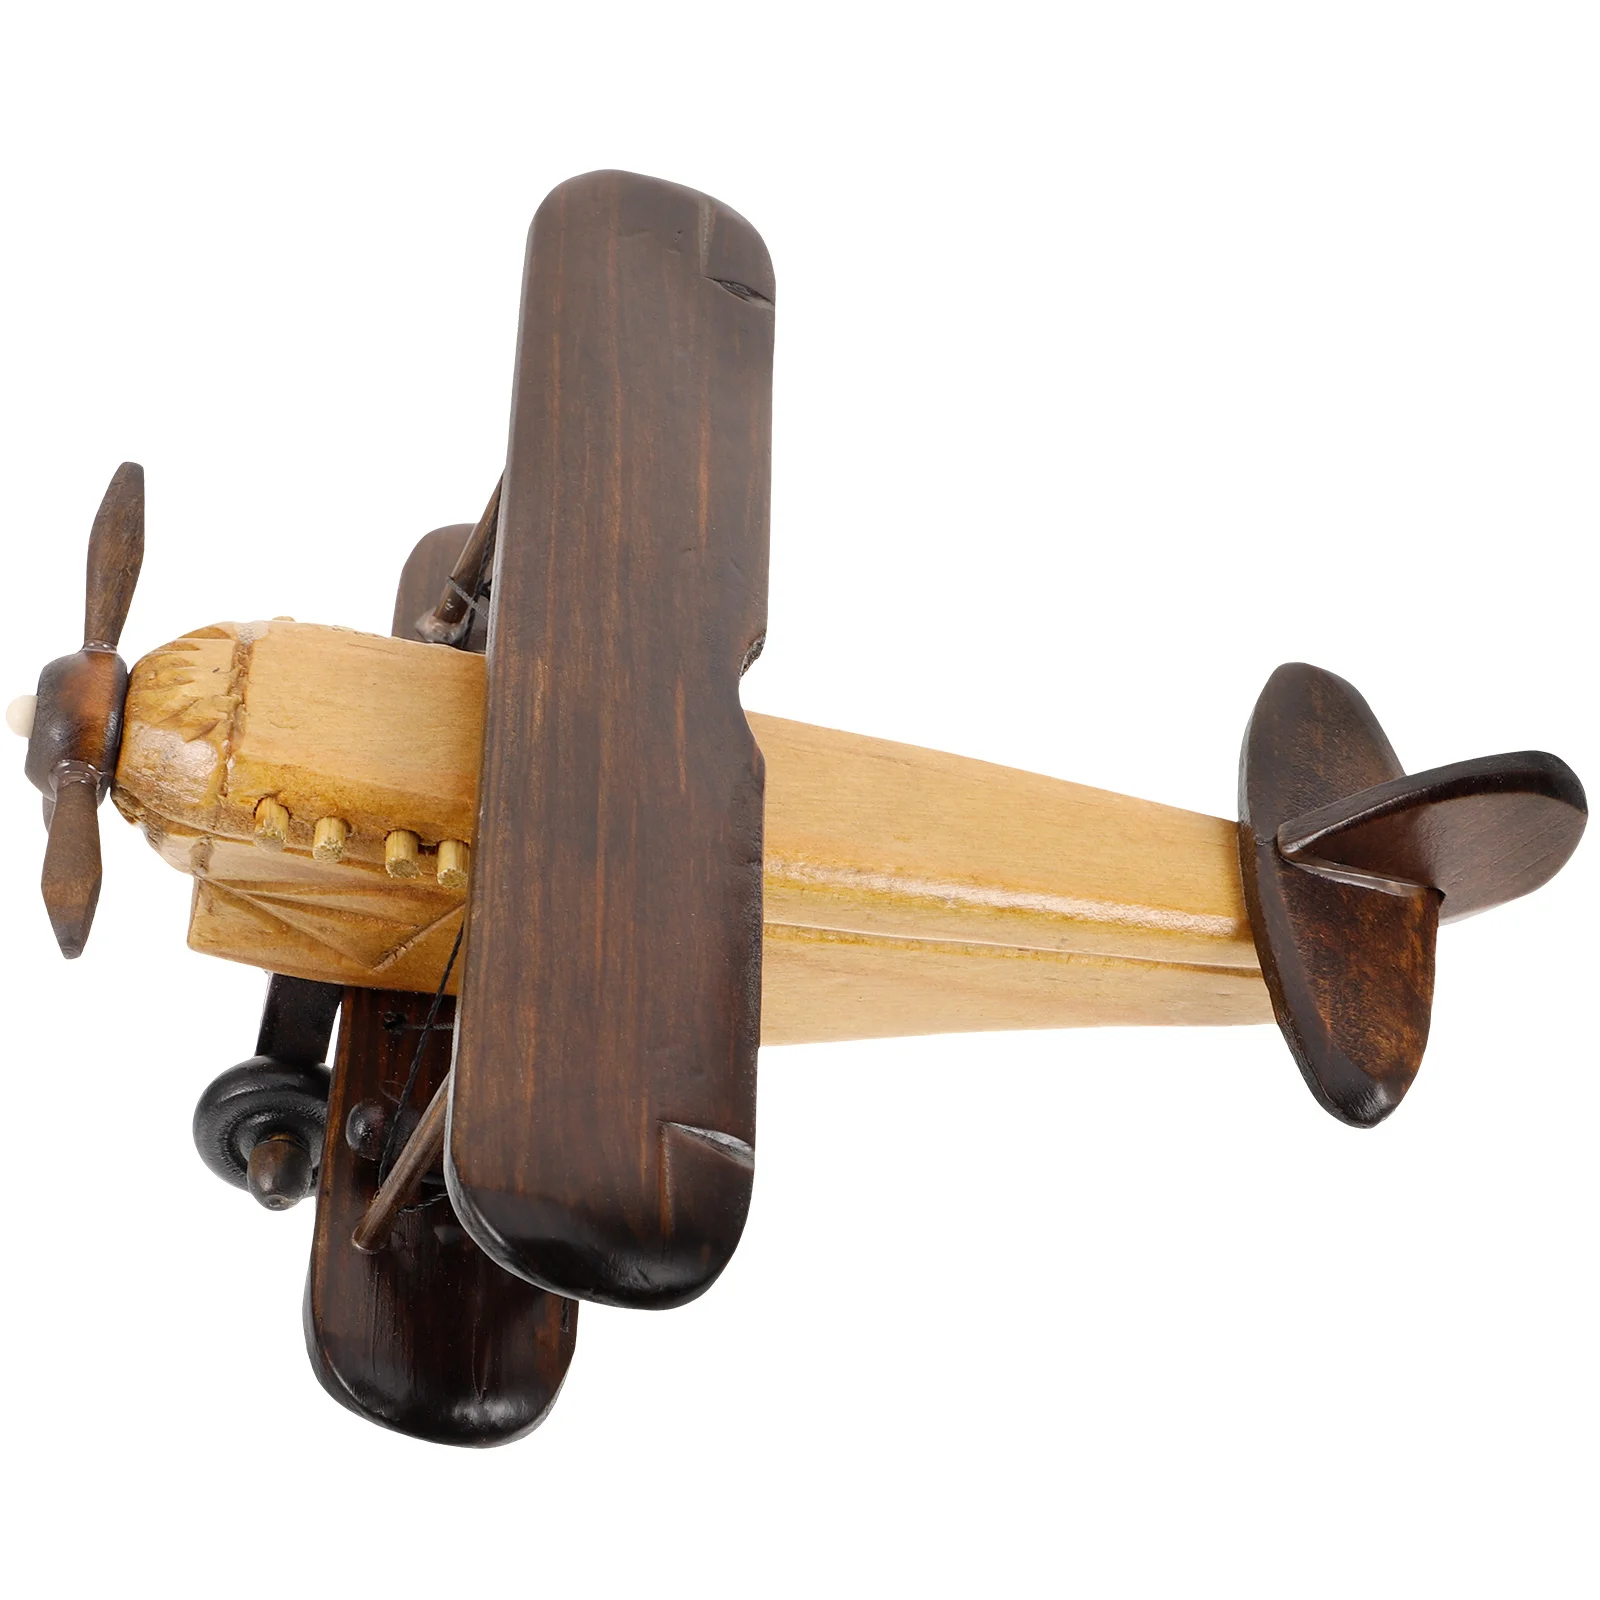 

Retro Wooden Plane Toys Vintage Model Crafts Airplane Room Decor Ornament Miniature